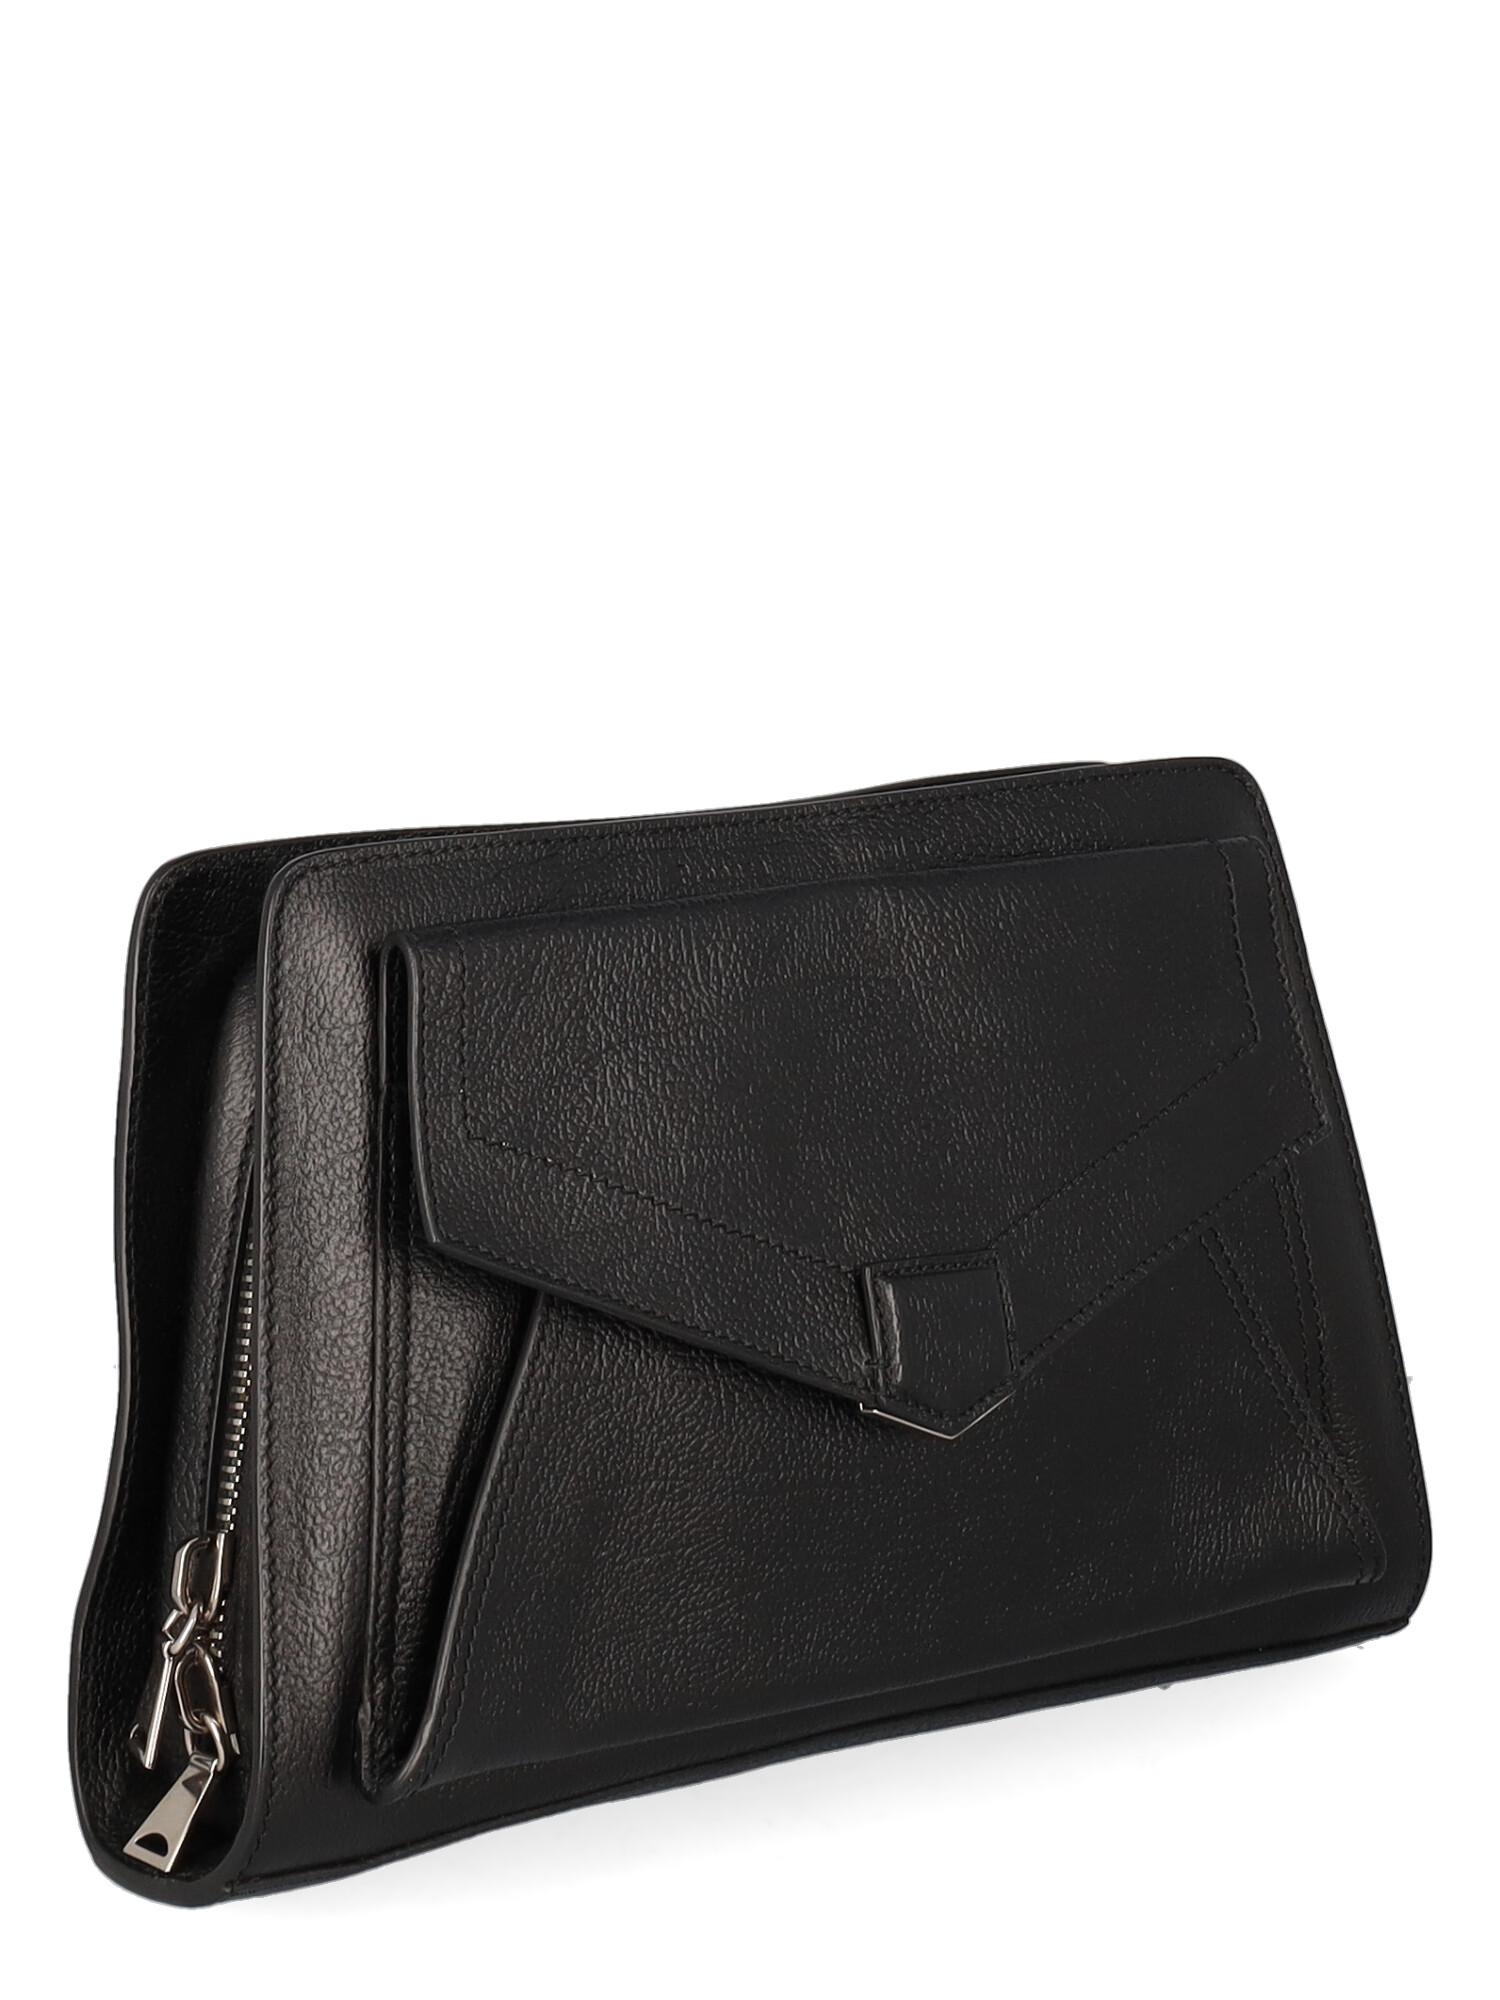 Proenza Schouler Women Handbags Black Leather  In Excellent Condition For Sale In Milan, IT